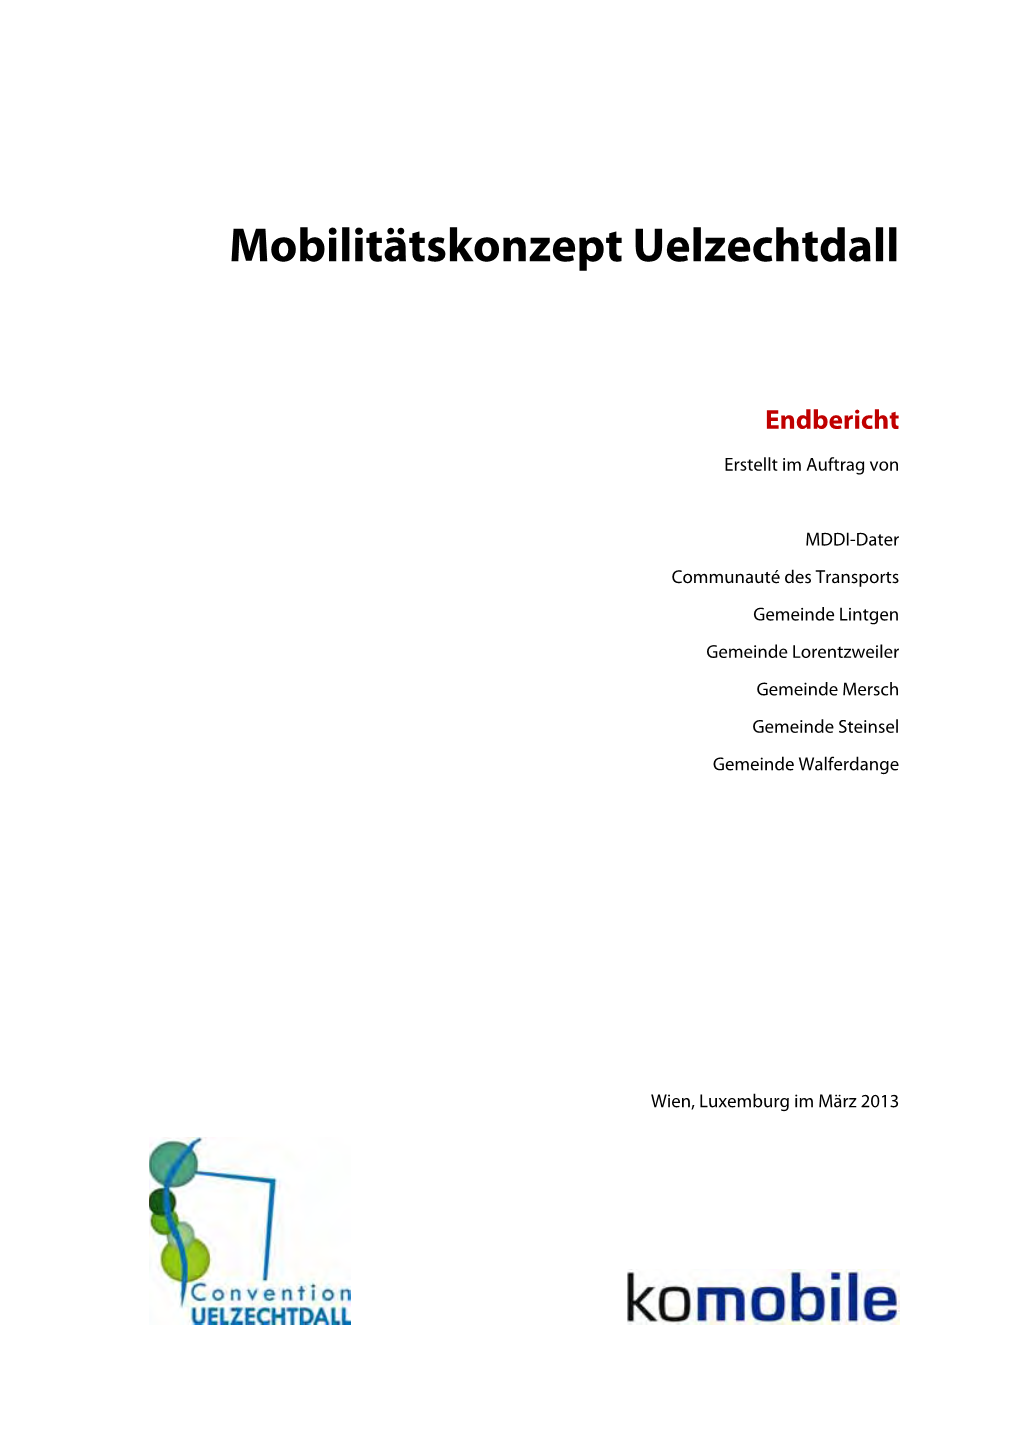 Mobilitätskonzept Uelzechtdall